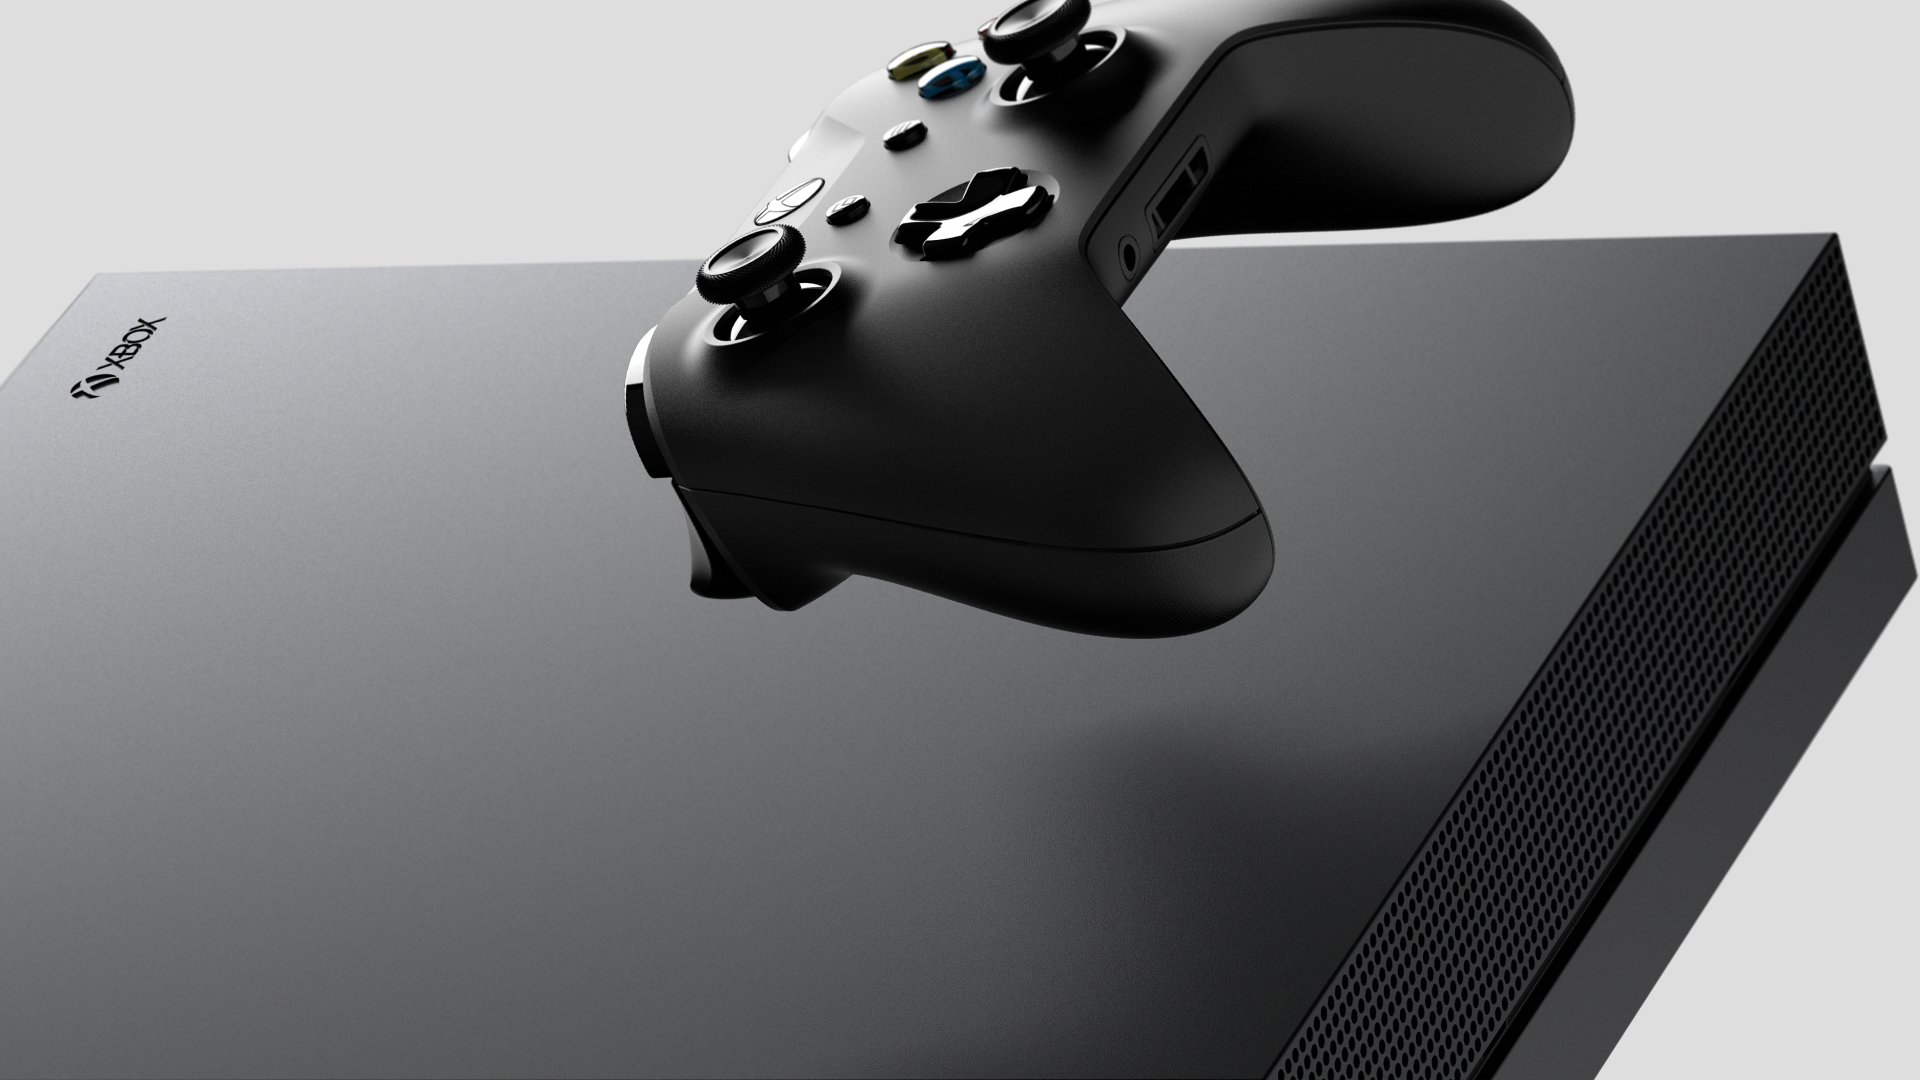 hetzelfde lekken transactie Xbox One X: Explaining 4K, HDR, Supersampling and More - Xbox Wire